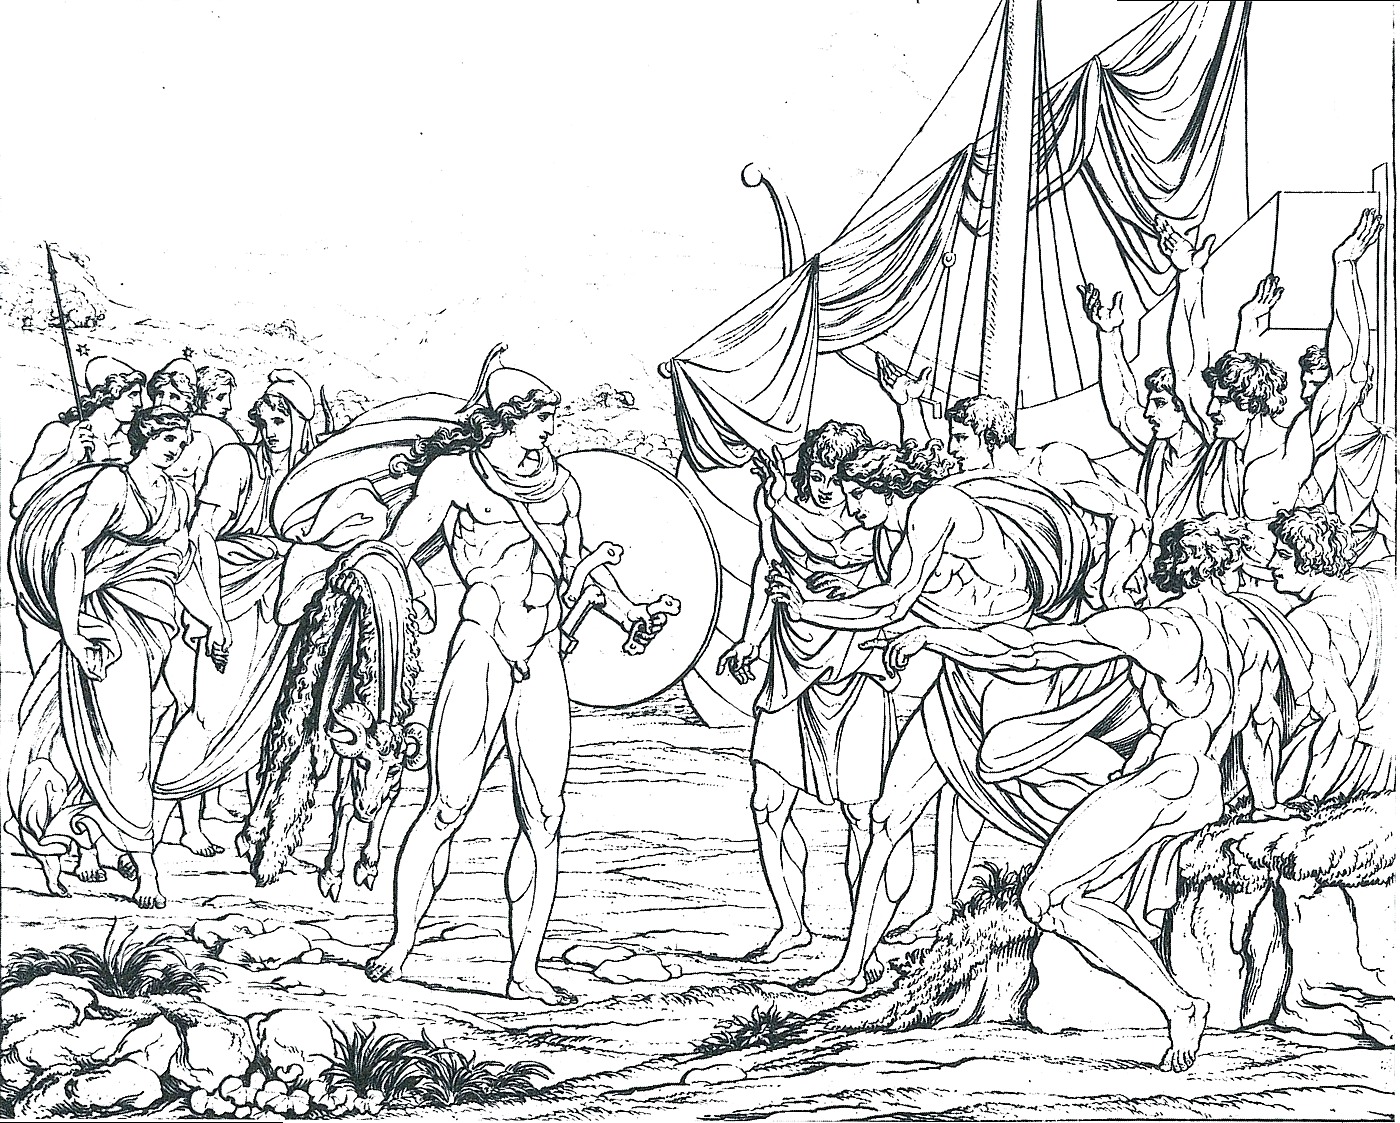 A. J. Carstens: Jason med det gyldne skind, 1797